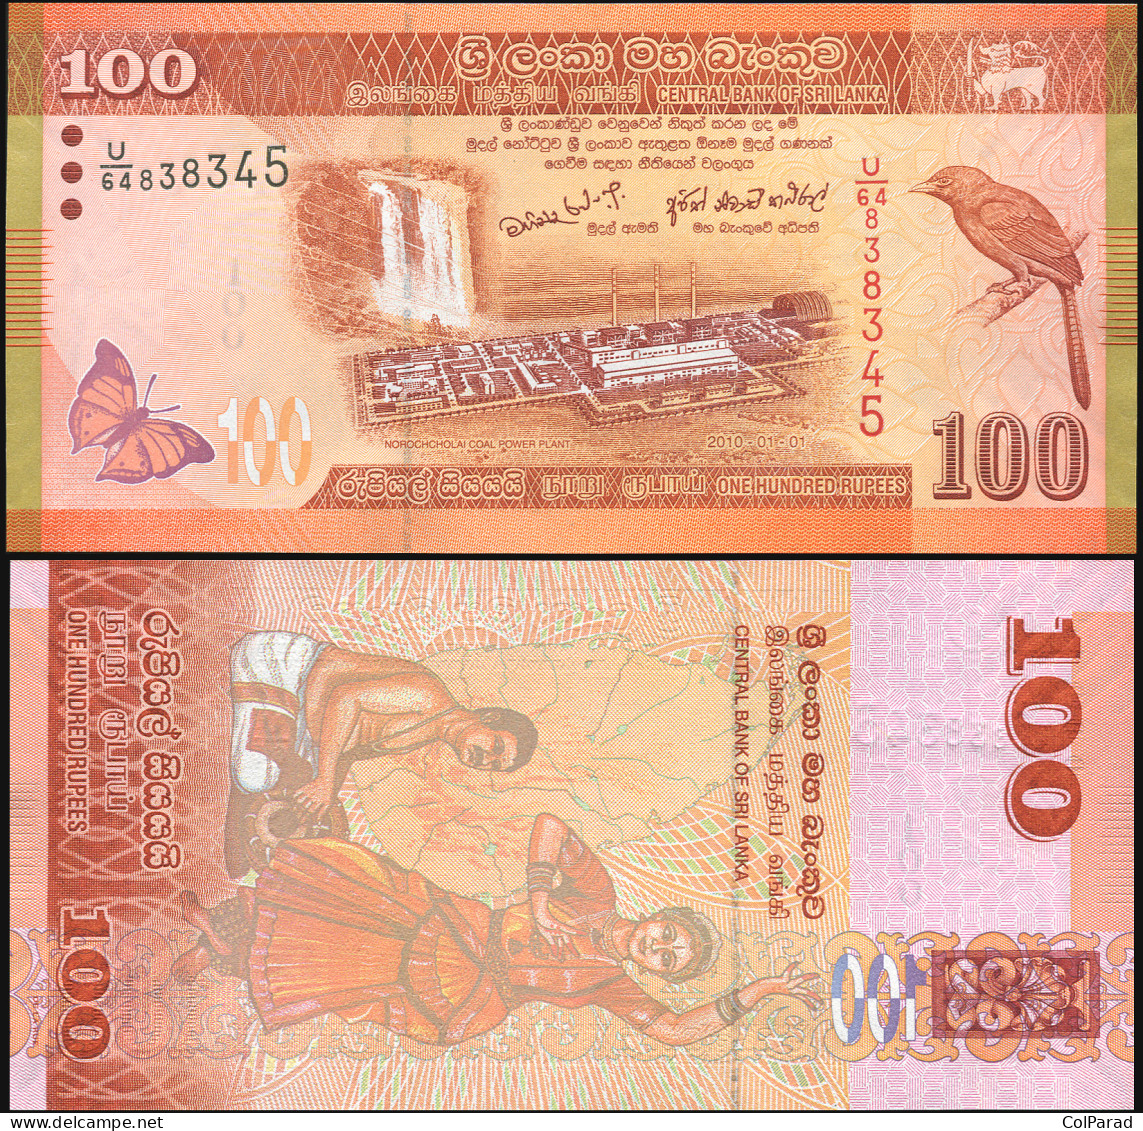 SRI LANKA 100 RUPEES - 01.01.2010 (2011) - Paper Unc - P.125a1 Banknote - Sri Lanka